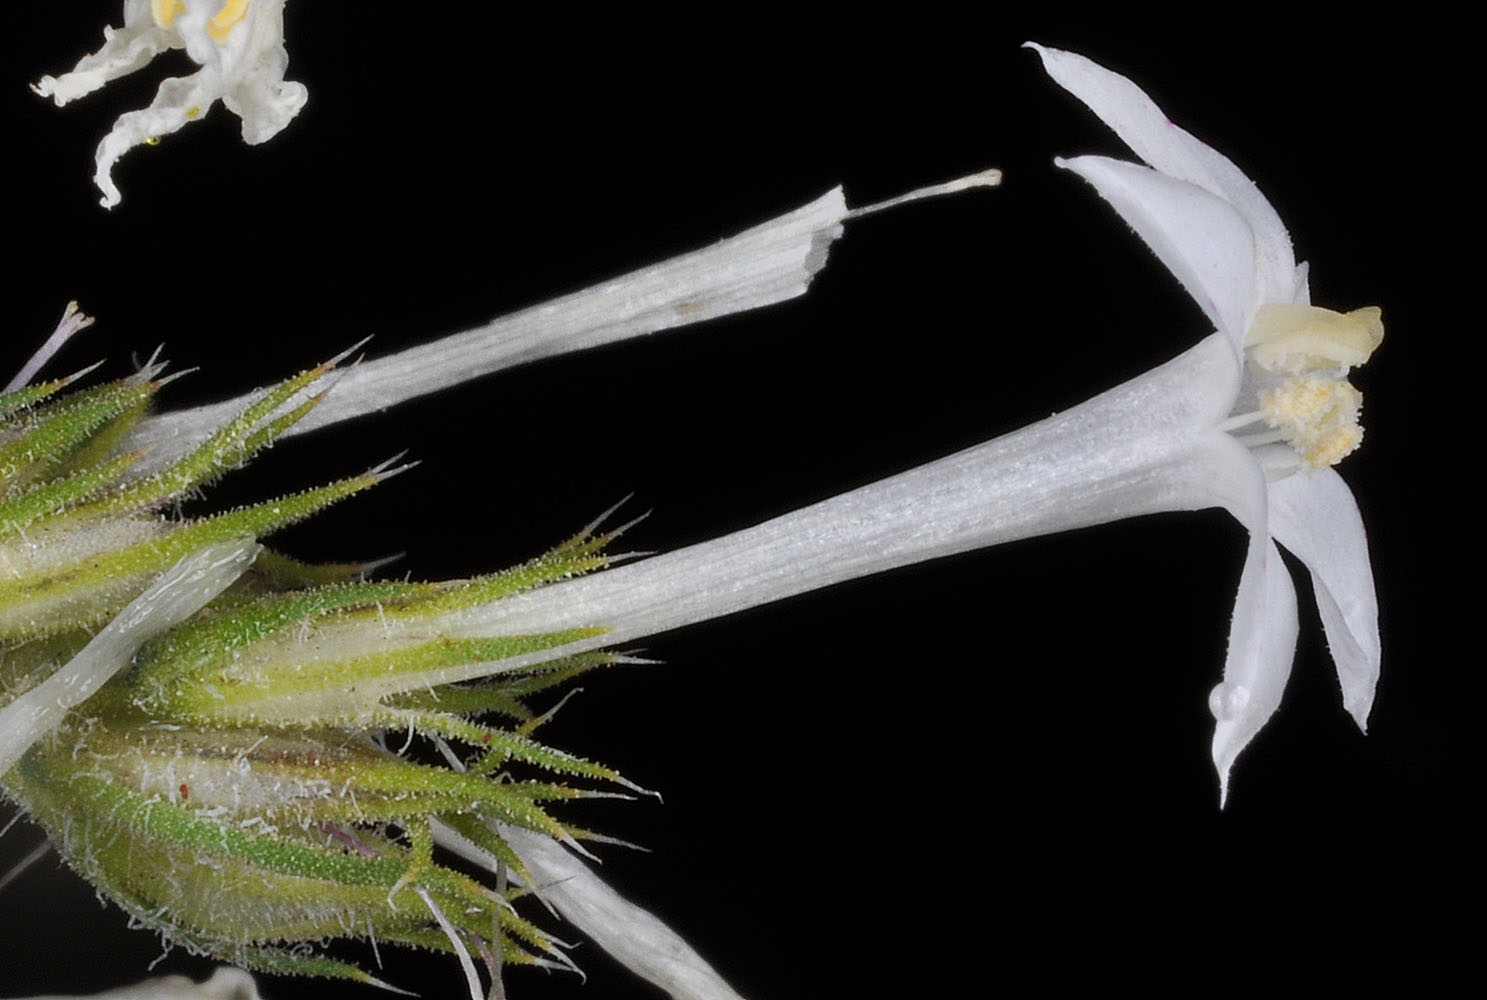 Flora of Eastern Washington Image: Ipomopsis aggregata